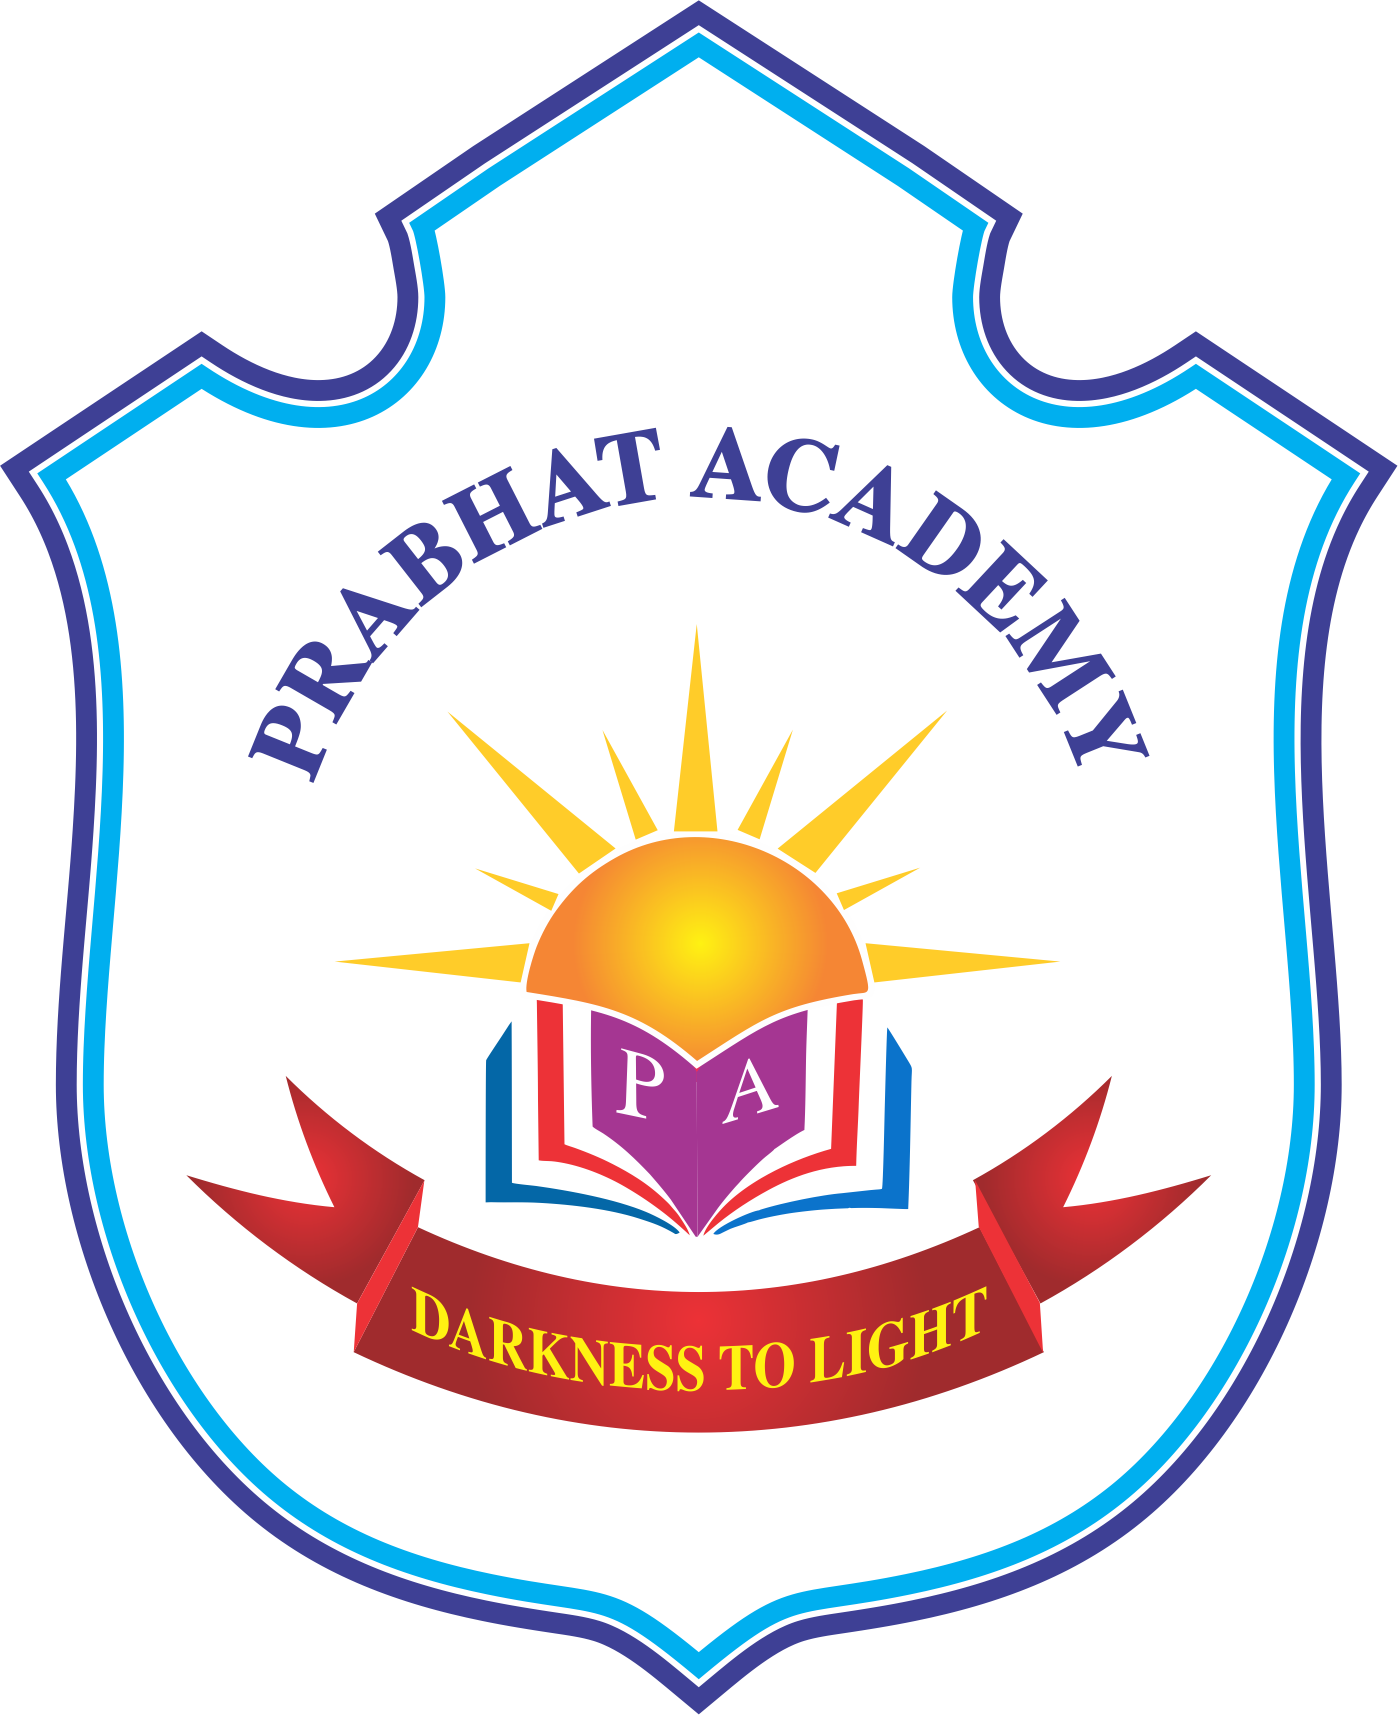 Prabhat Academy